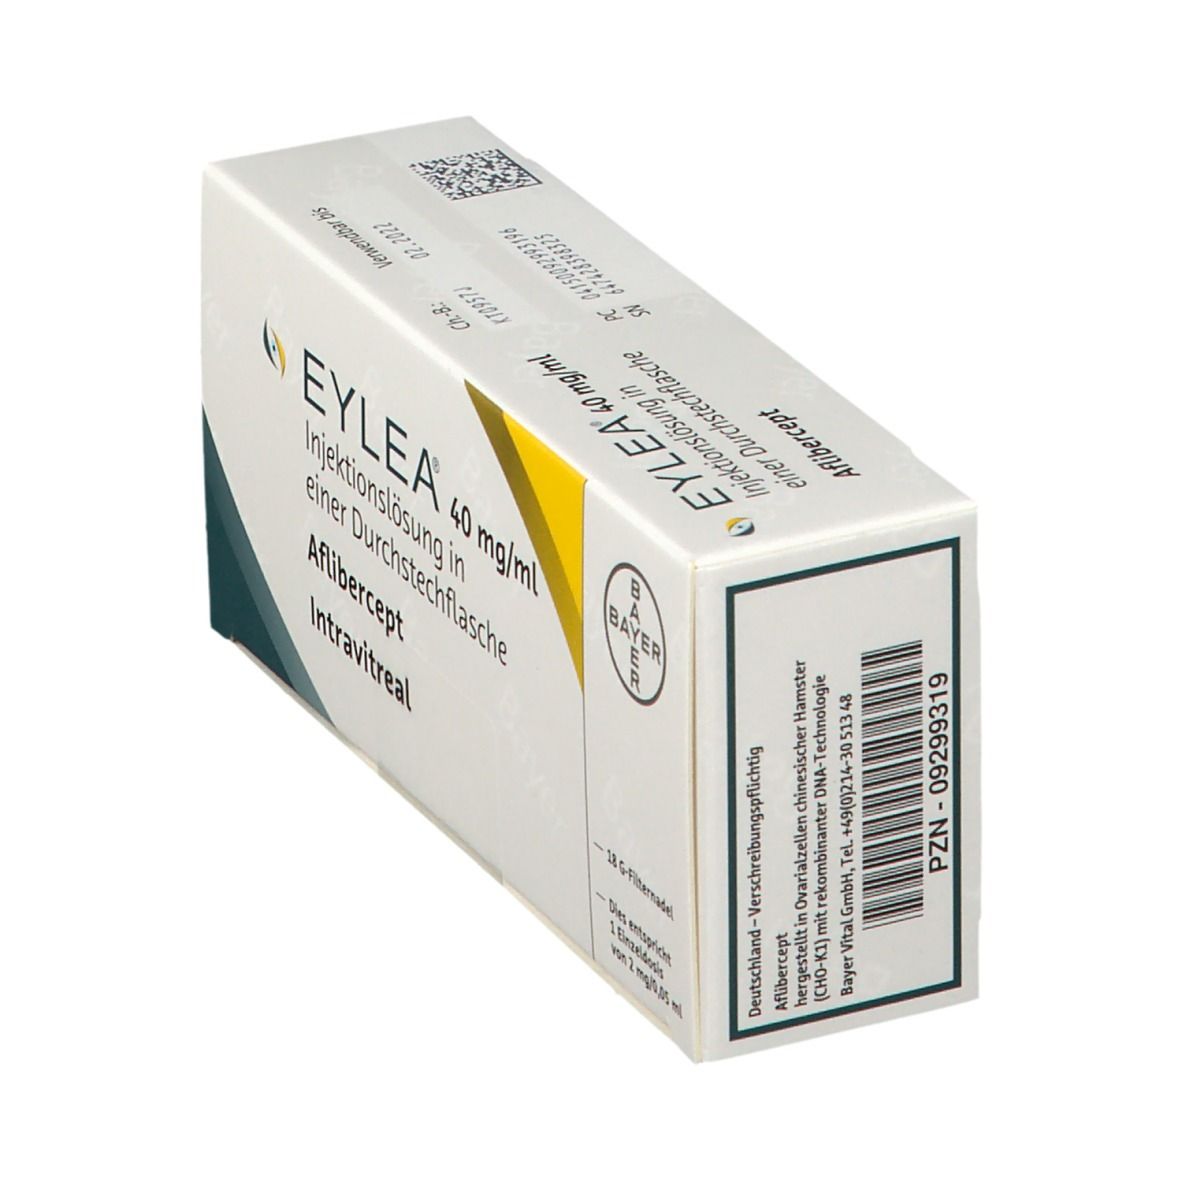 Eylea® 40 mg/ml